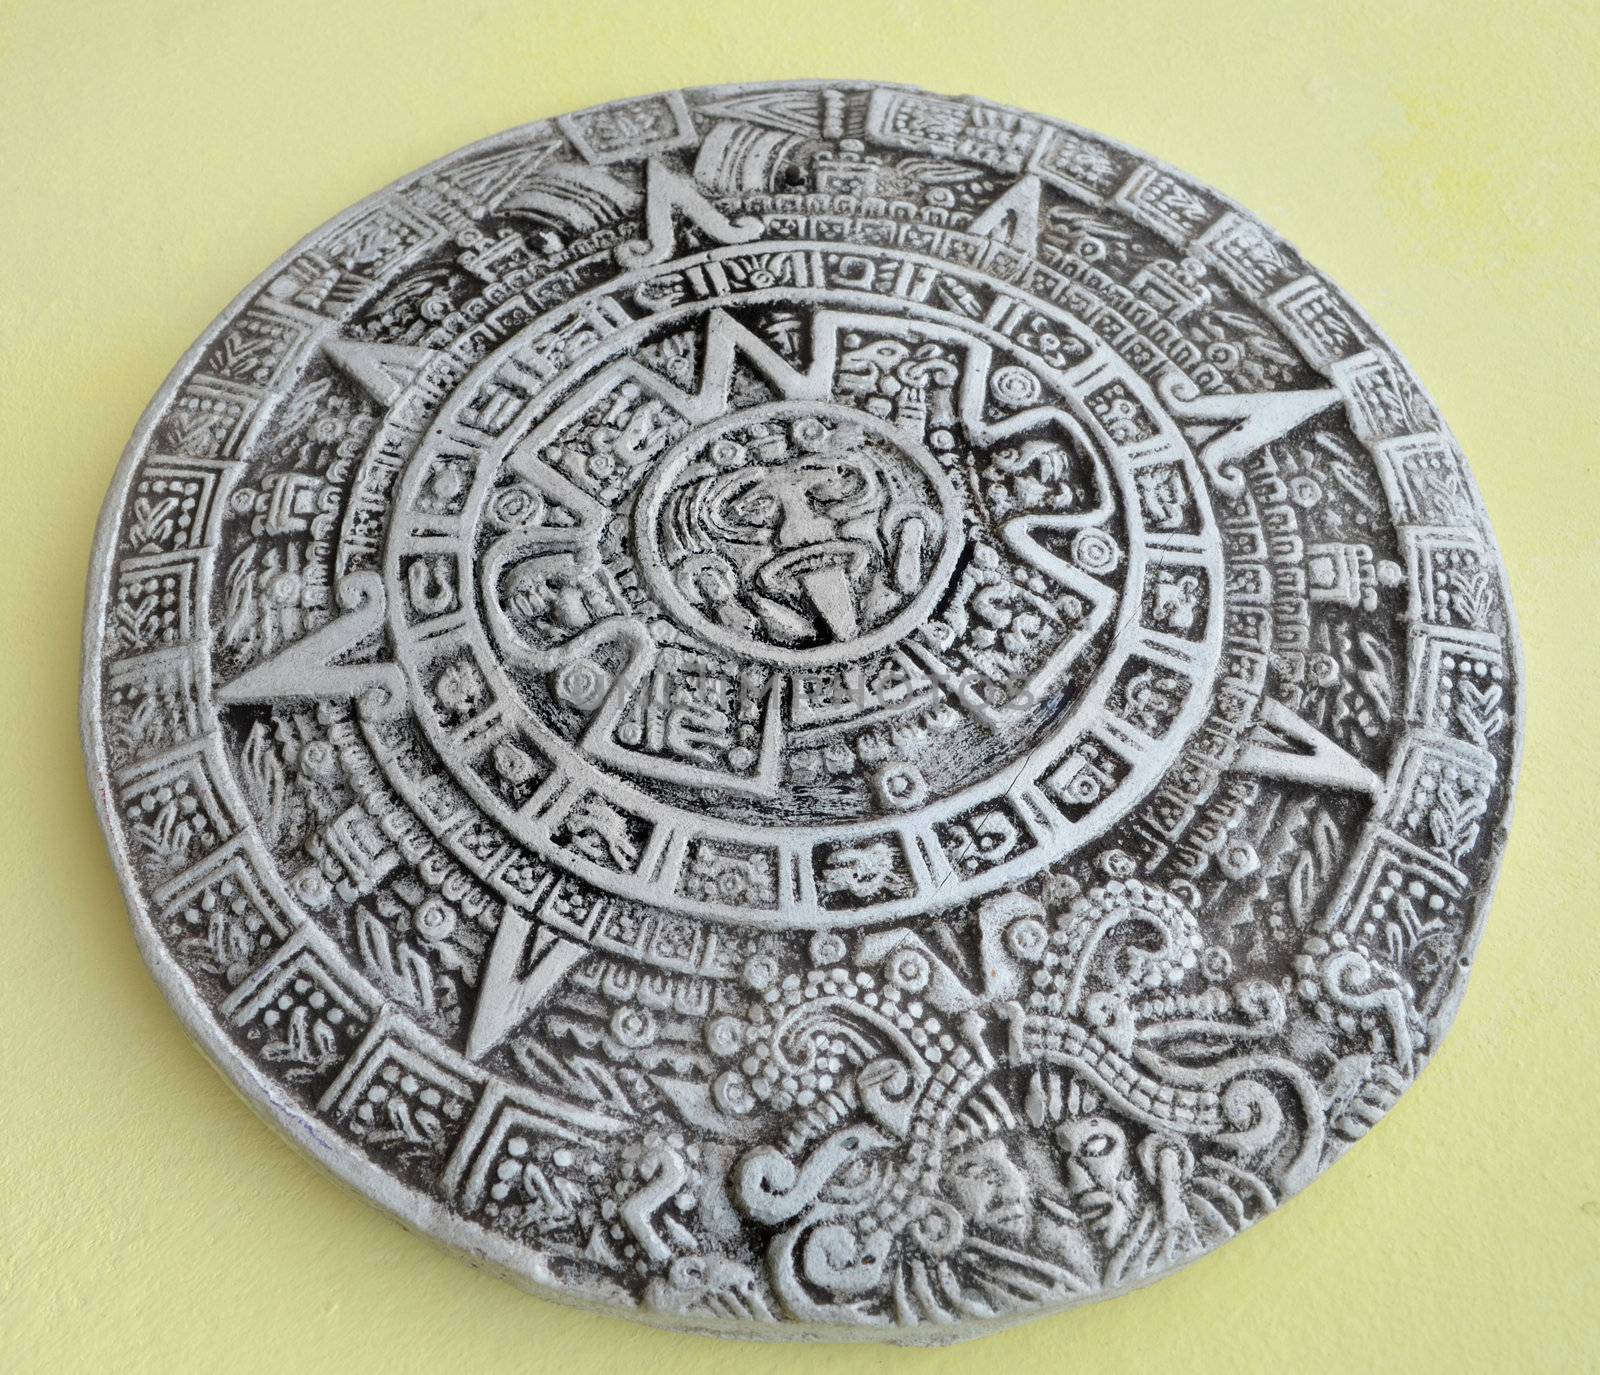 Mayan calendar by artofphoto